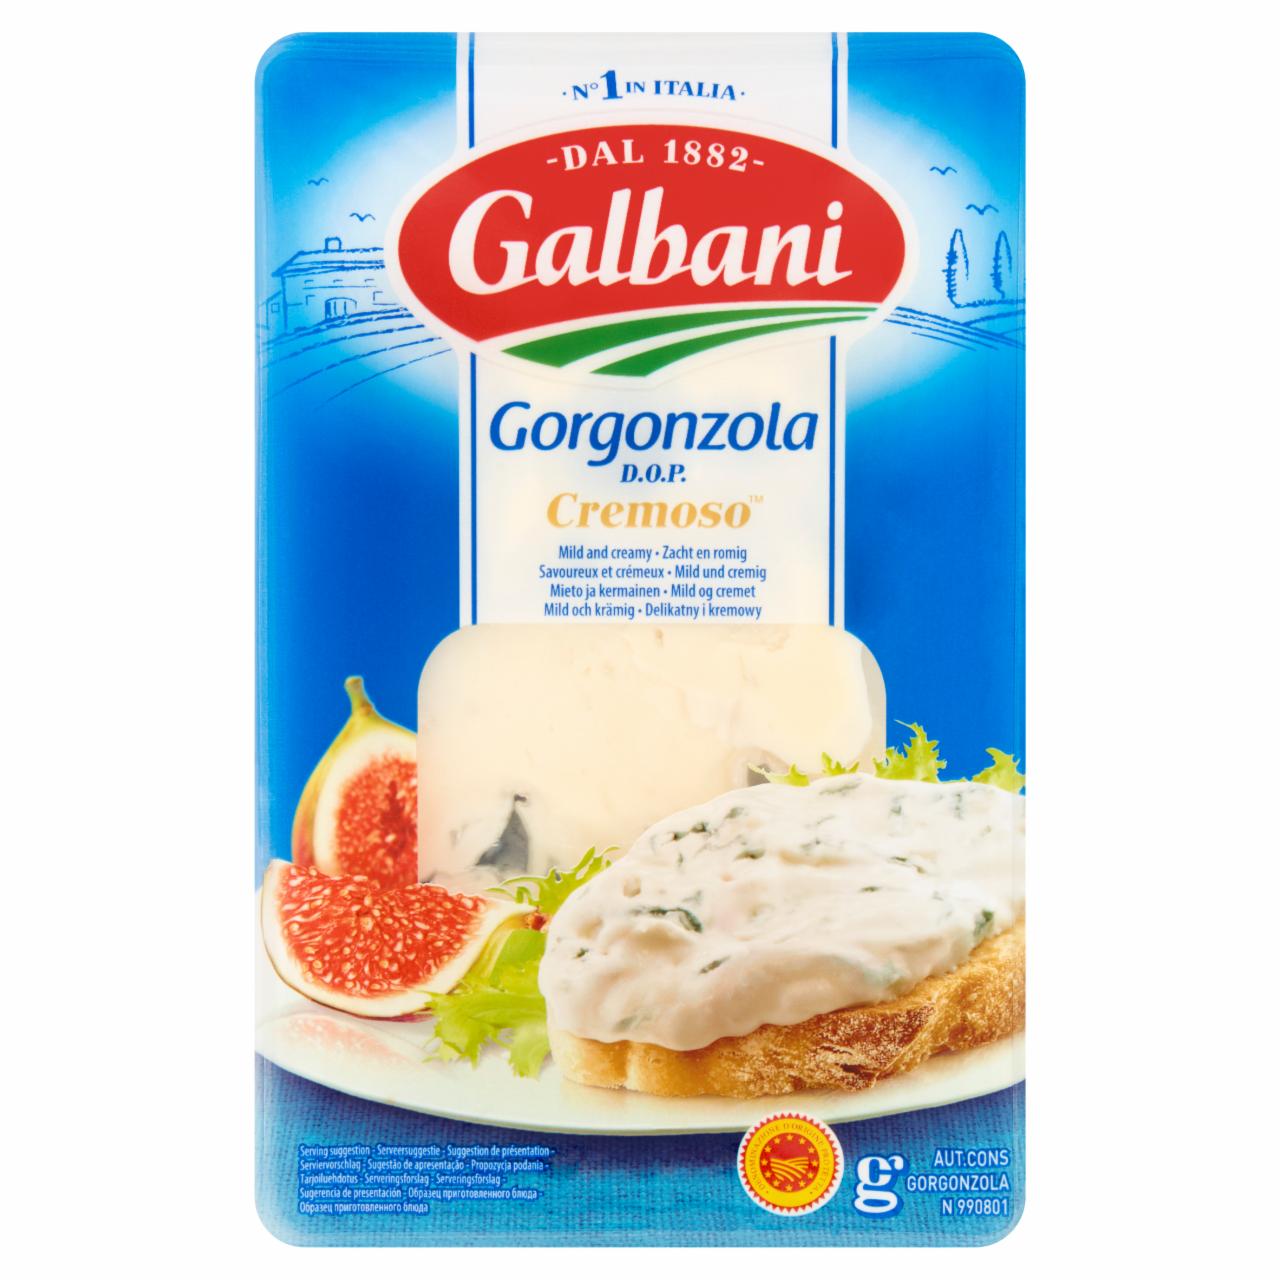 Zdjęcia - Galbani Gorgonzola Cremoso Ser 150 g